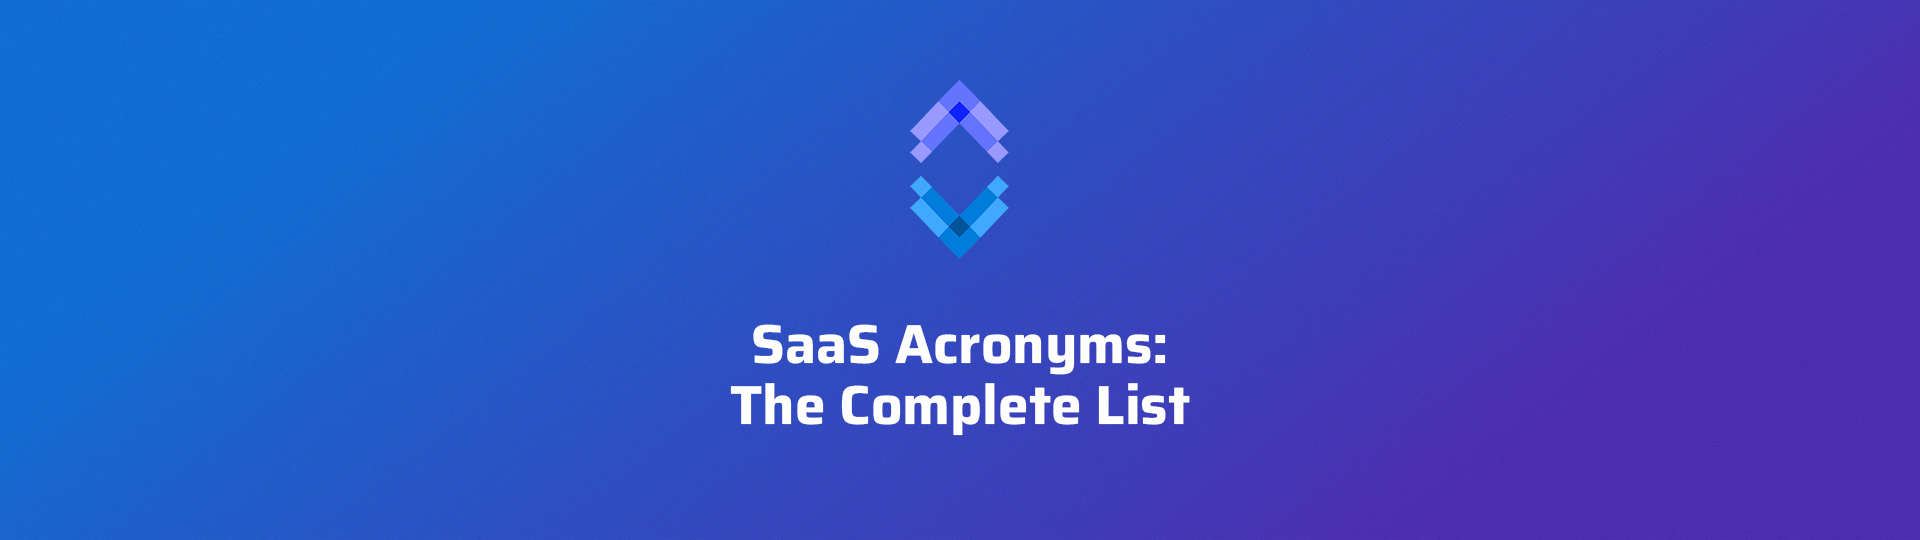 SaaS Acronyms The Complete List